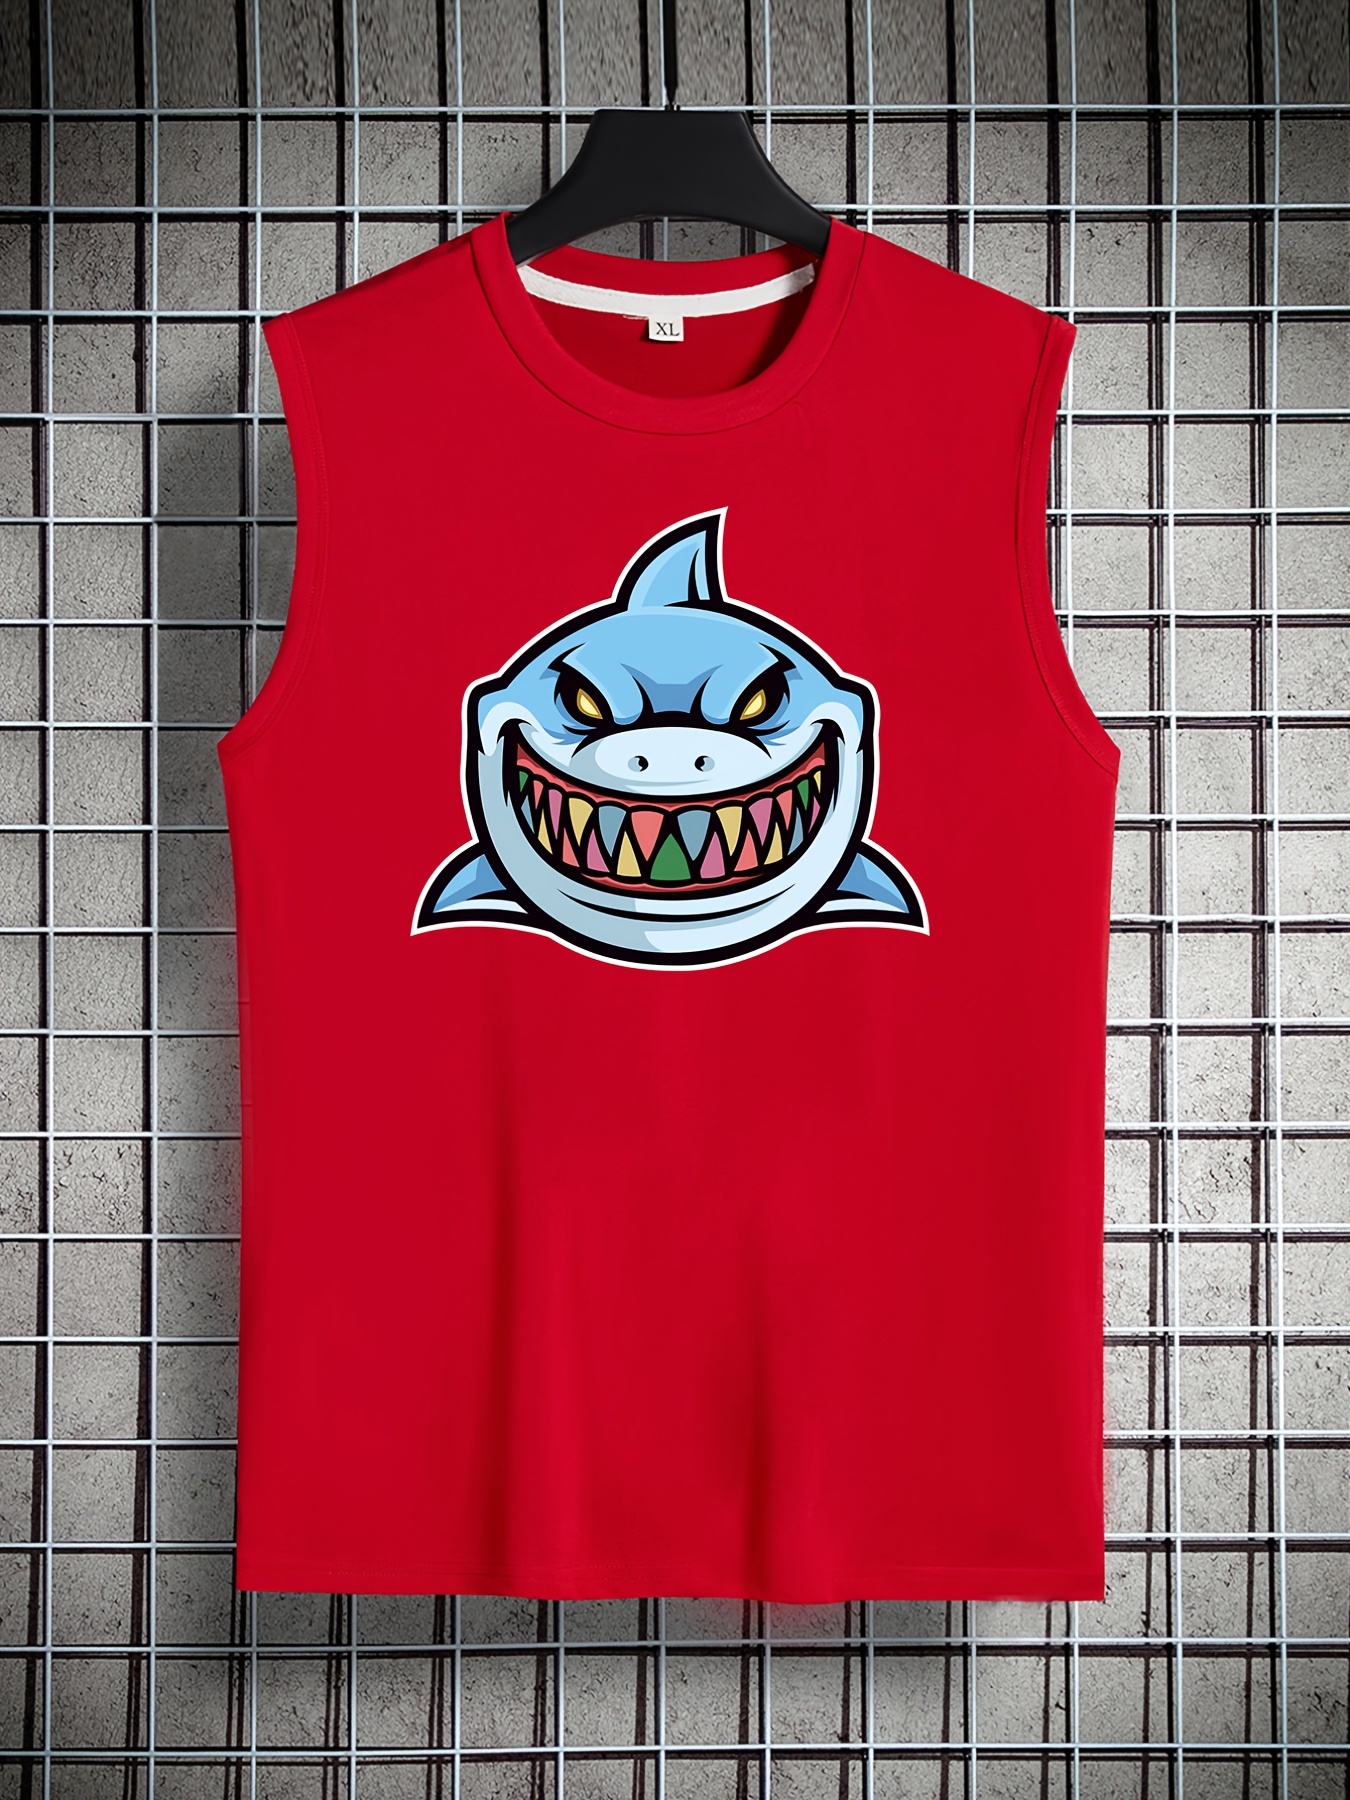 Printed Basketball Uniform Sharks style